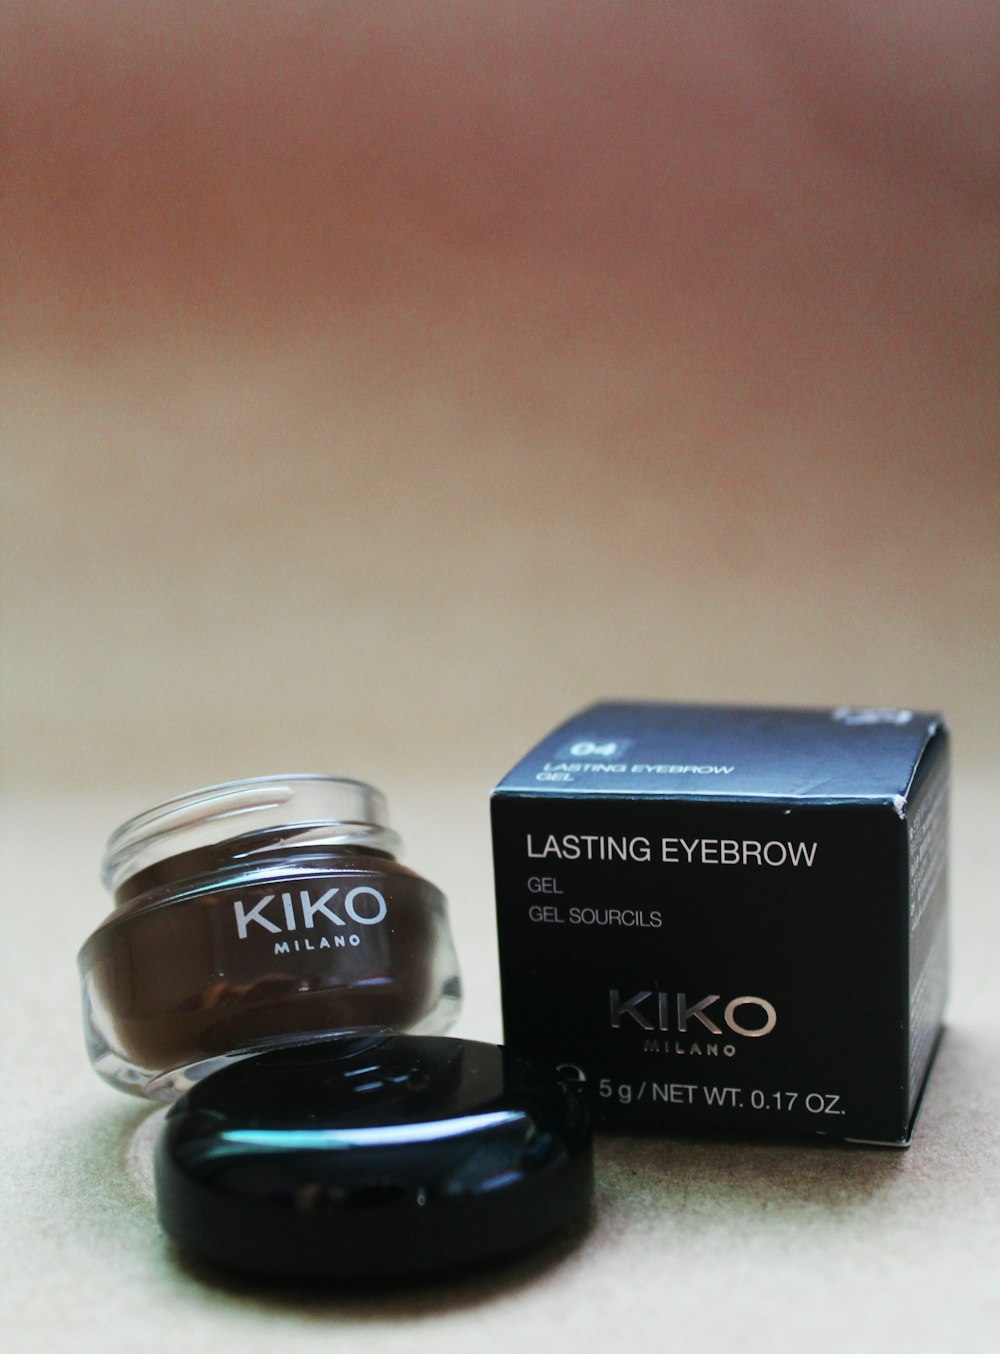 Kiko lasting eyebrow container with box